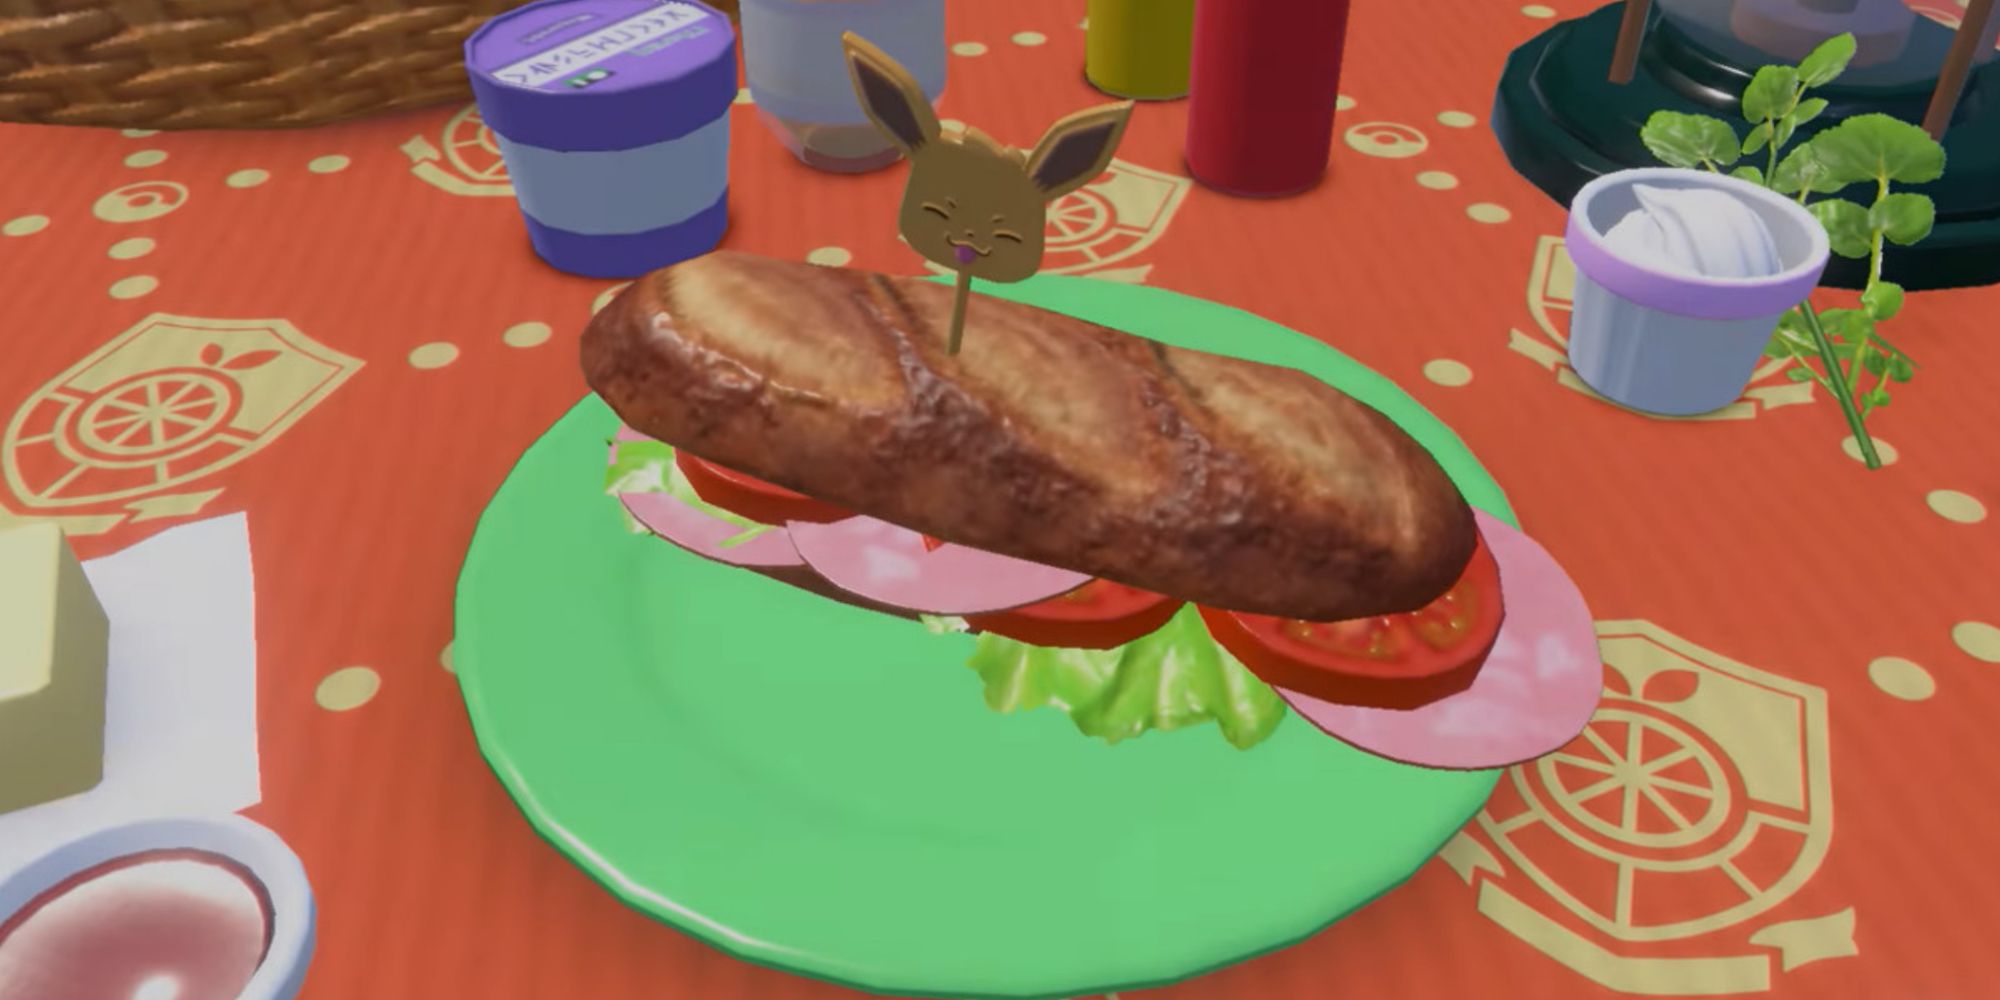 PSA: Pokemon Scarlet & Violet Sandwiches Do not Want A Prime Bun